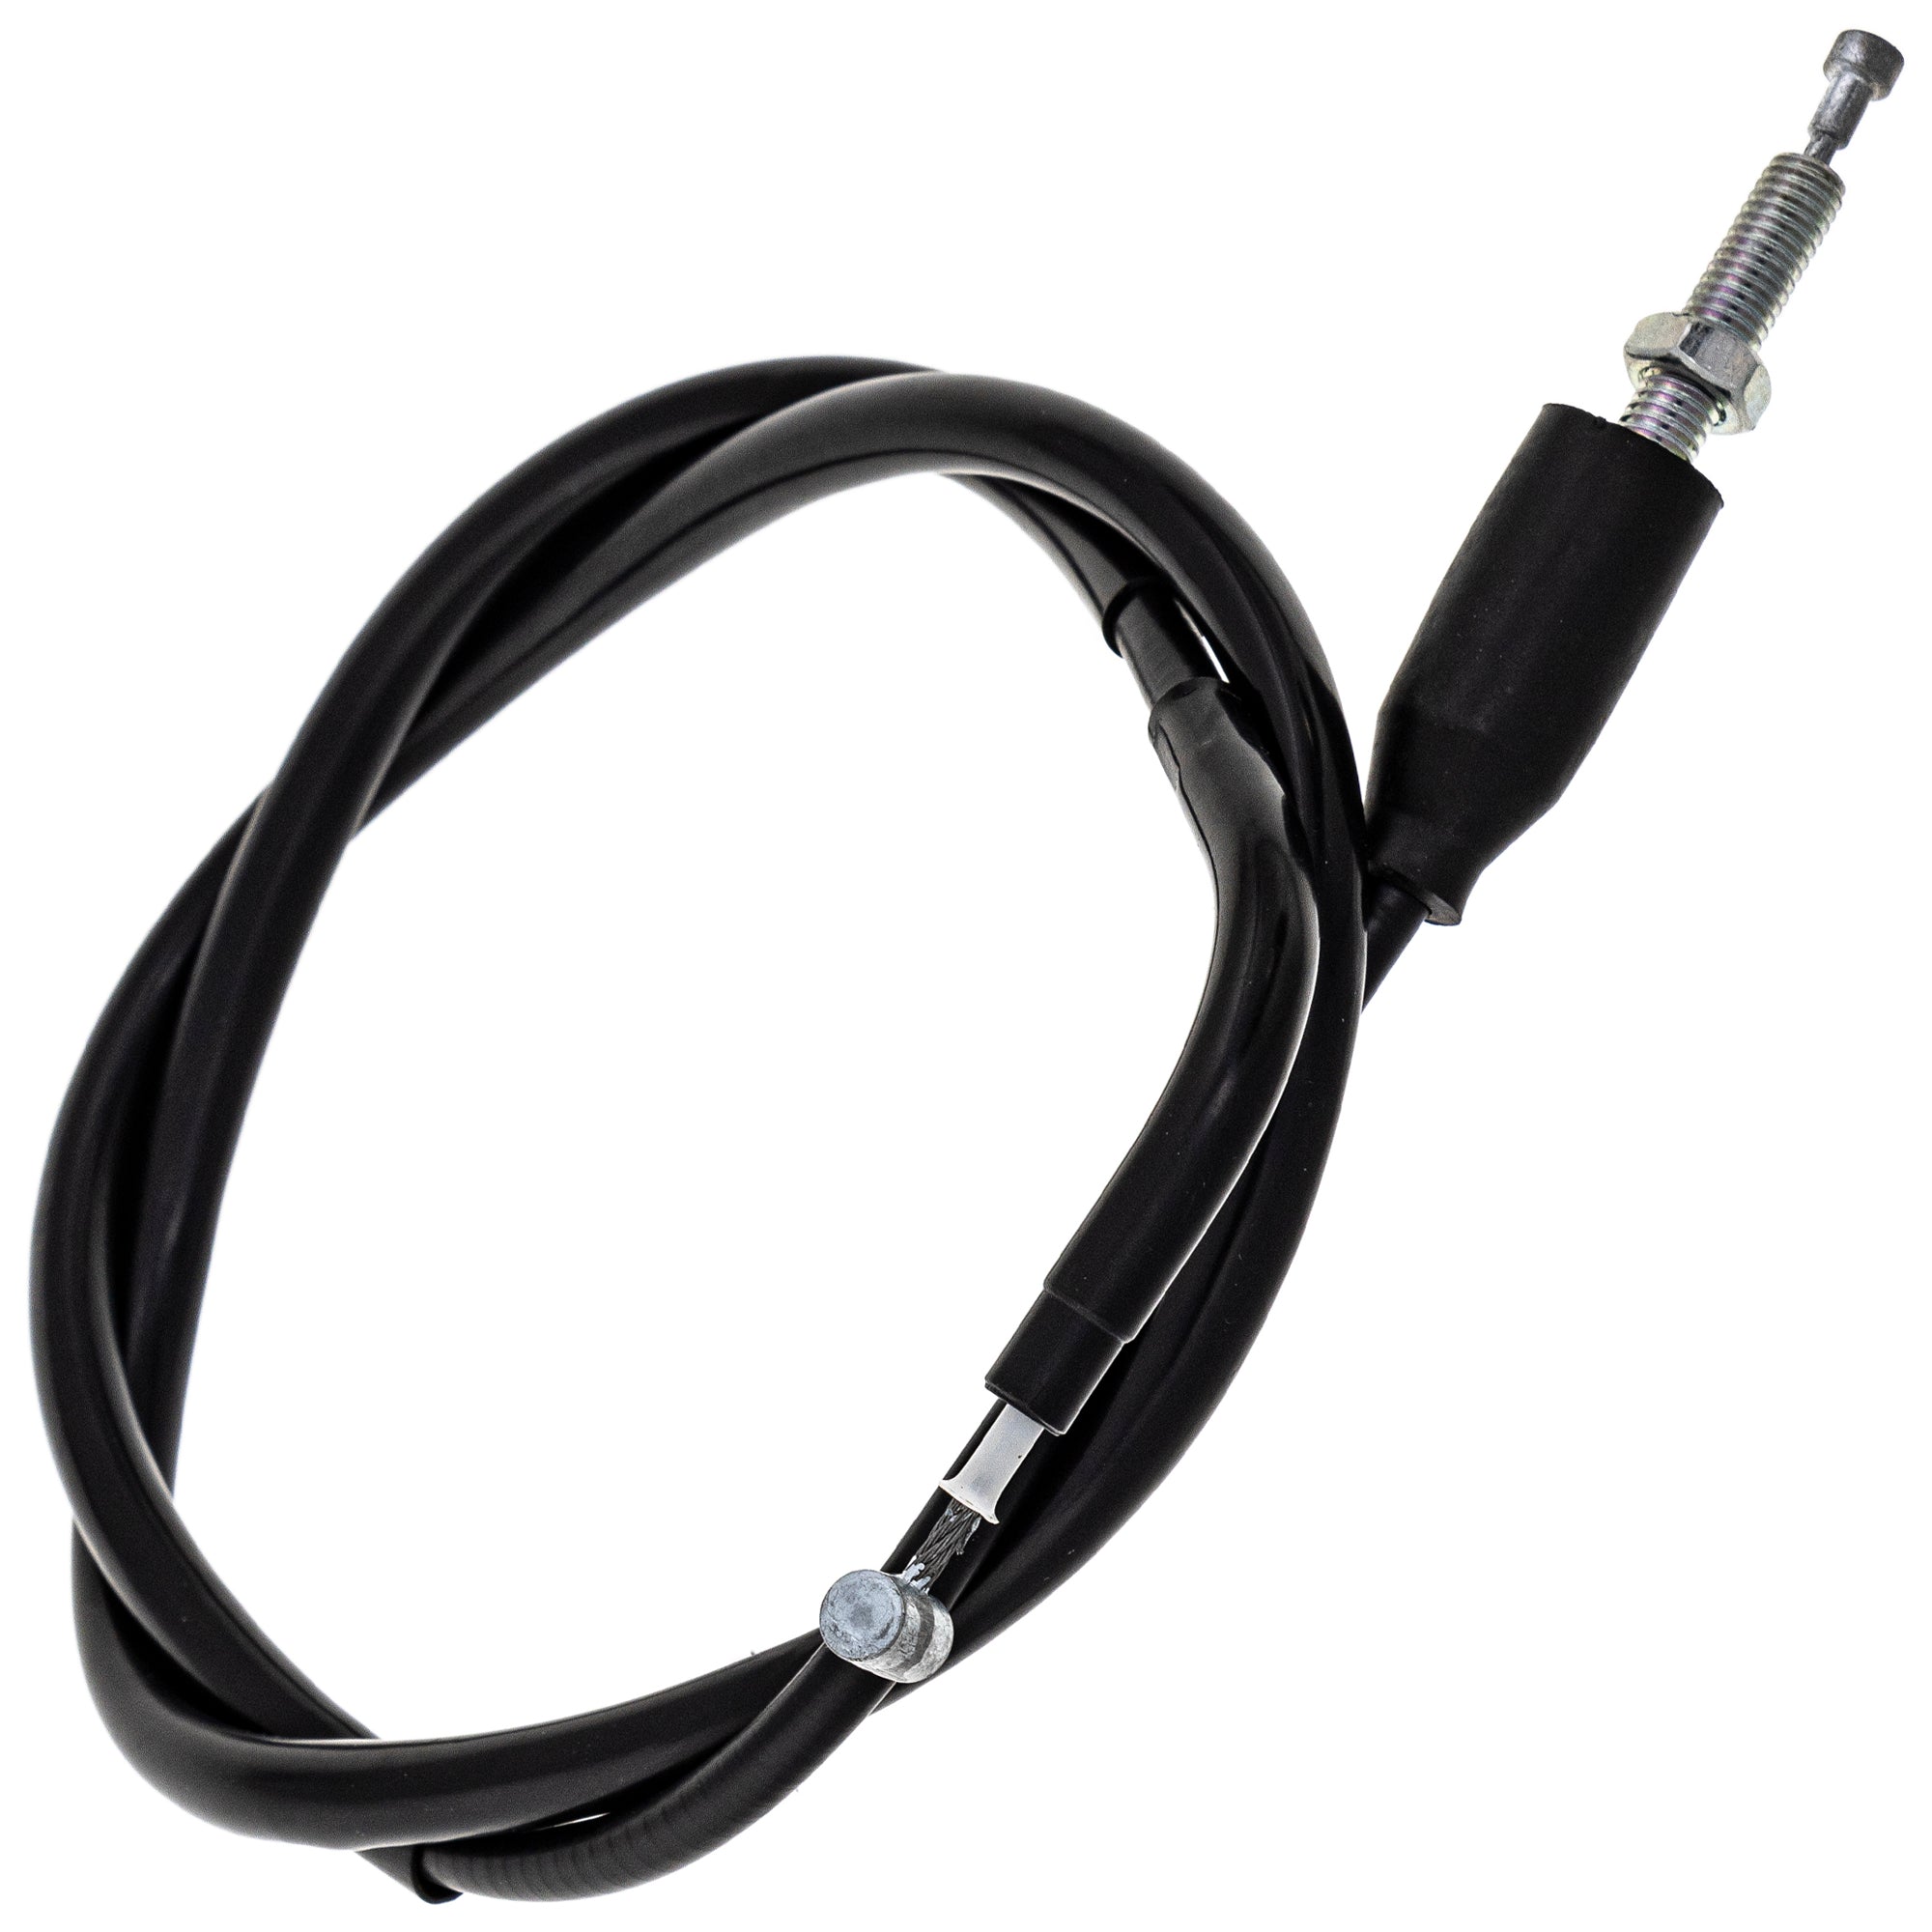 Clutch Cable For Suzuki 58200-20C00 58200-19C00 58200-08F01 58200-08F00